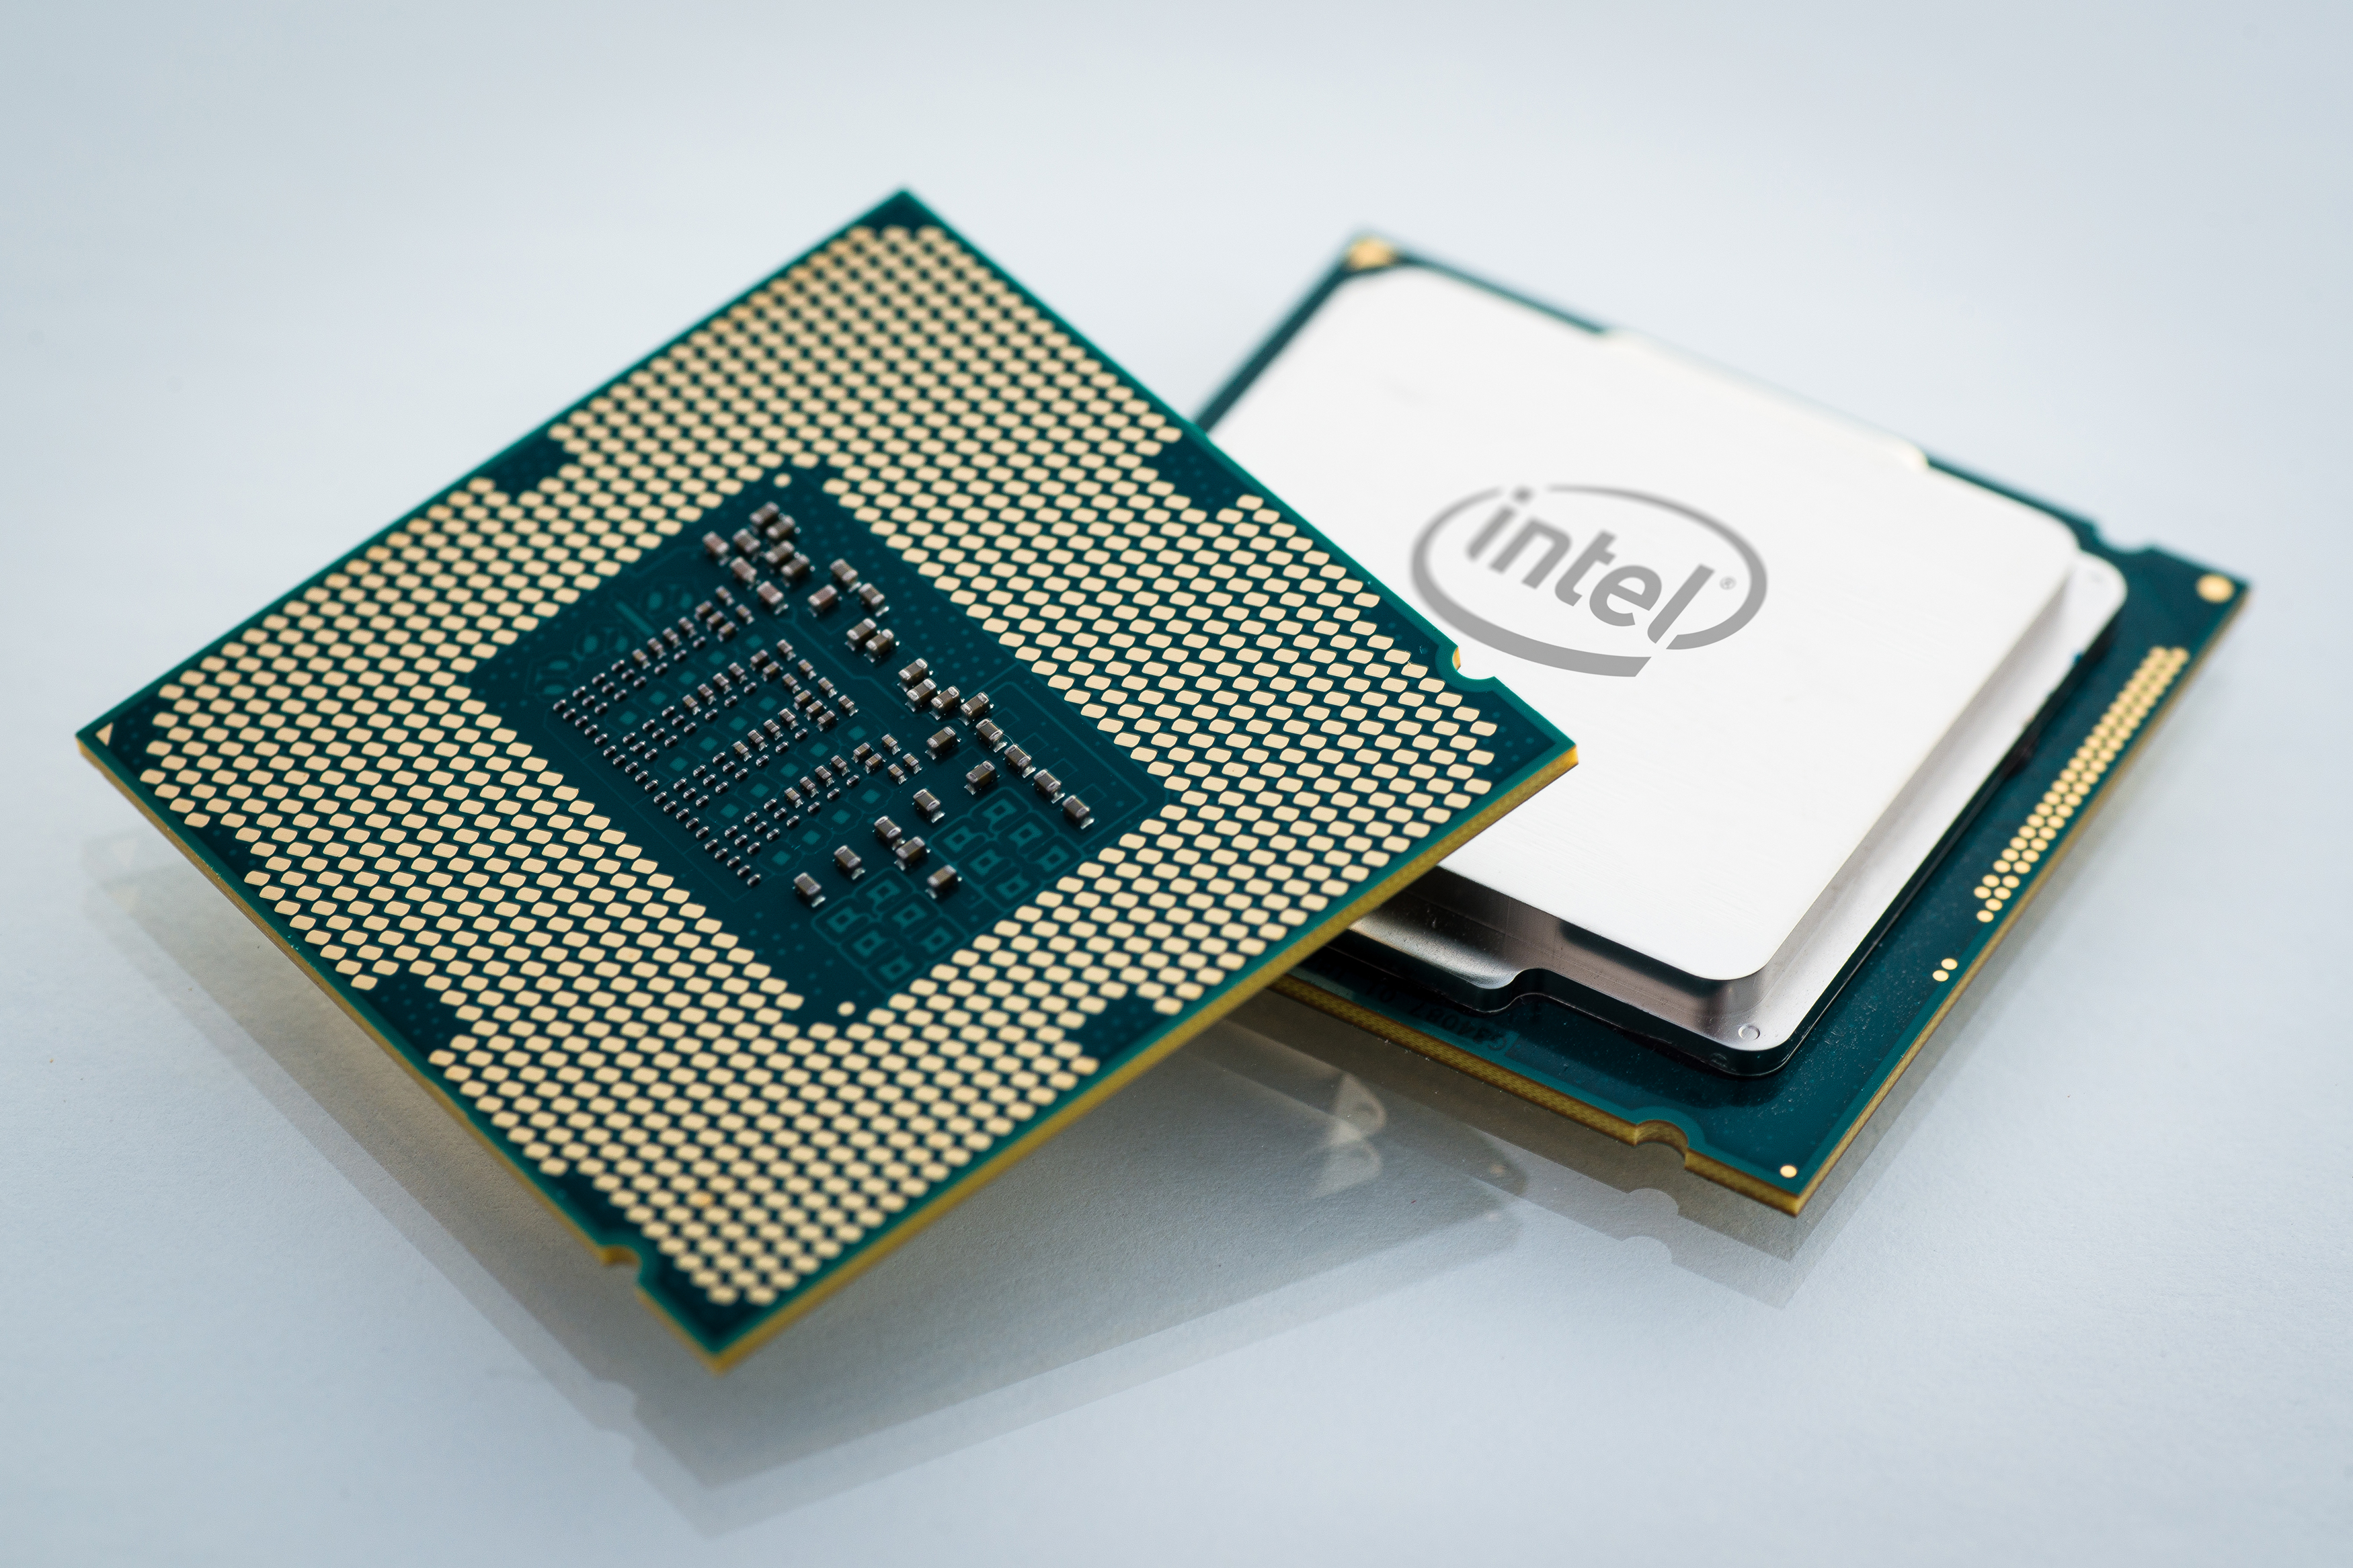 Процессор Intel Core 2 Extreme quad-core скачать